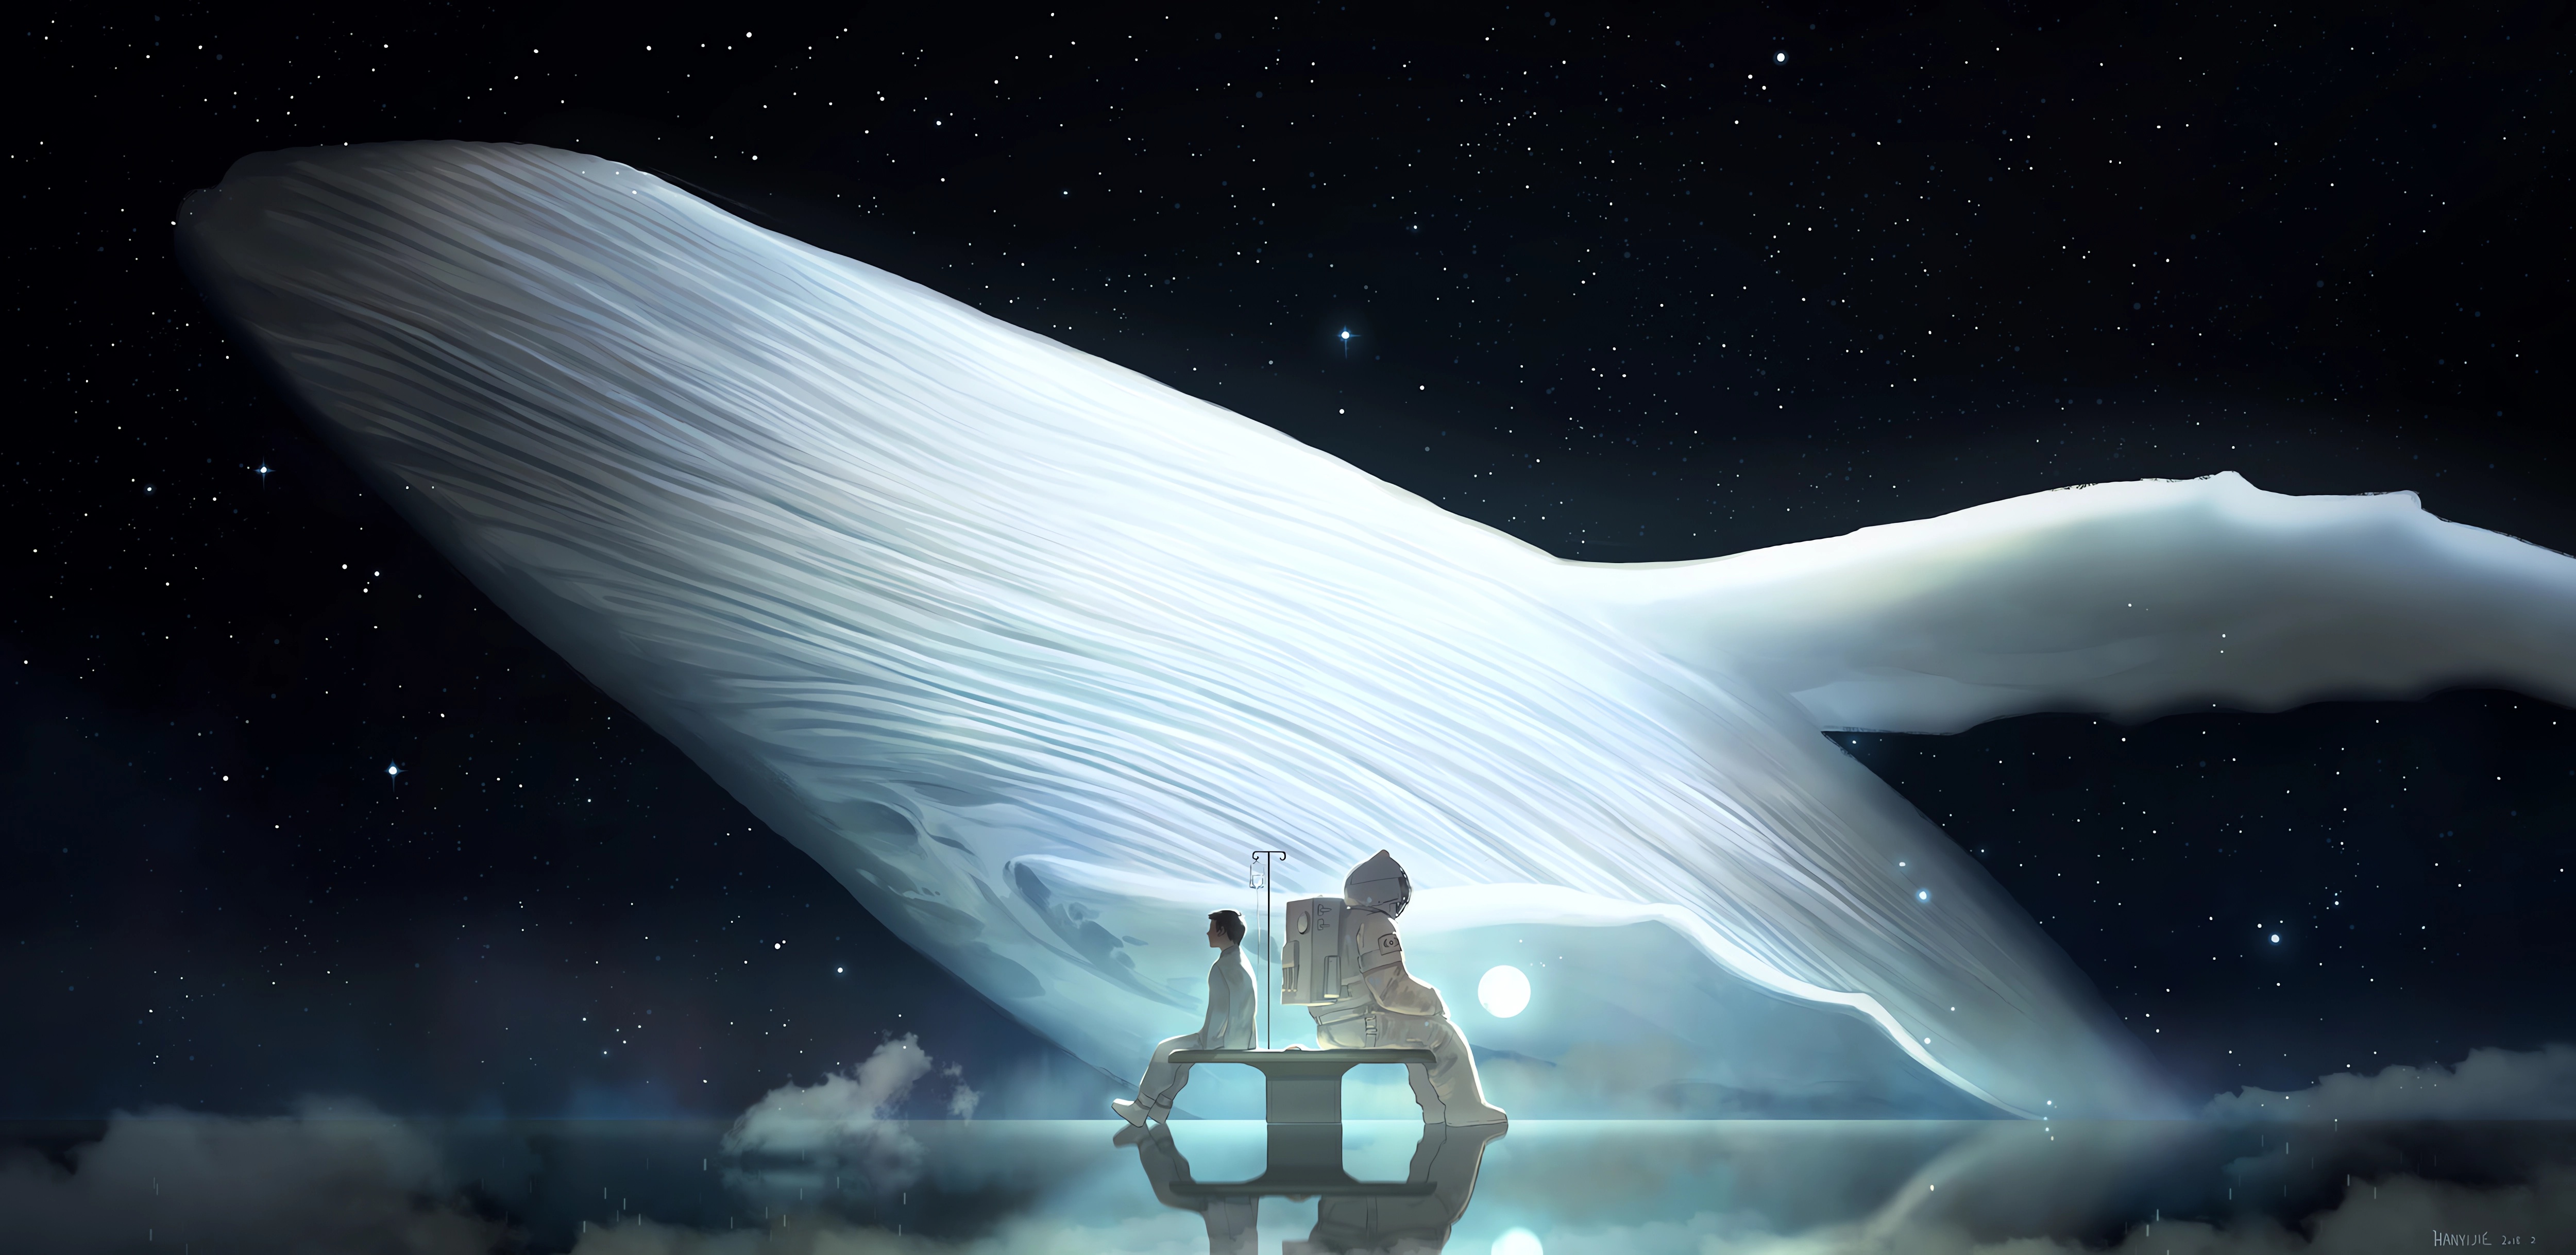 Anime 5000x2436 anime whale digital art spacesuit Sick Boy night sky stars astronaut sky space reflection sitting animals anime men